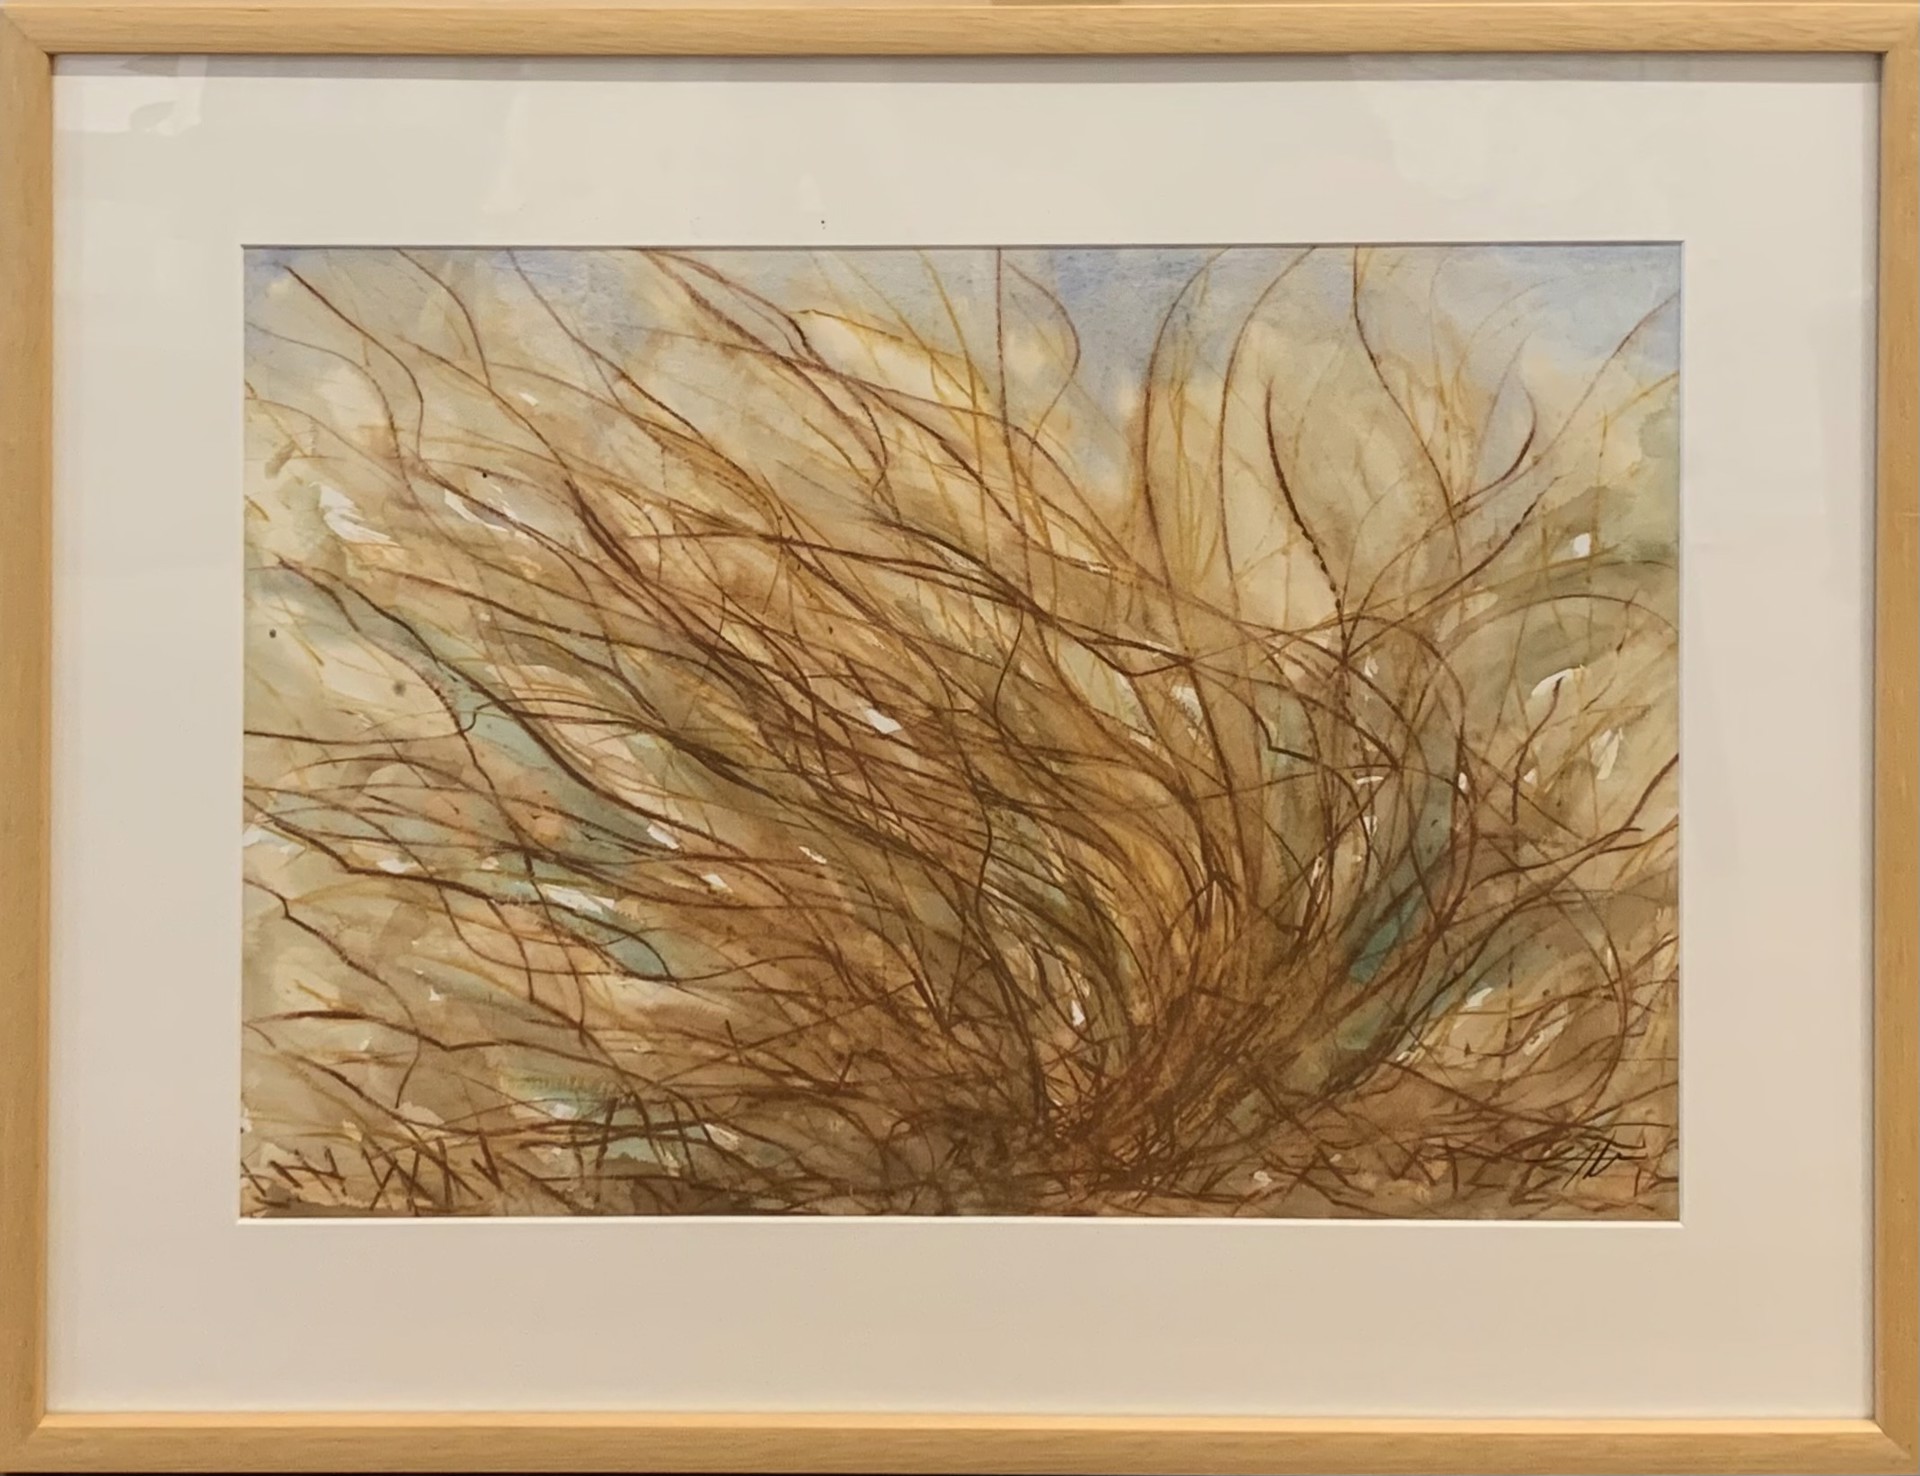 Marsh Grass 1 by Fritzi Huber